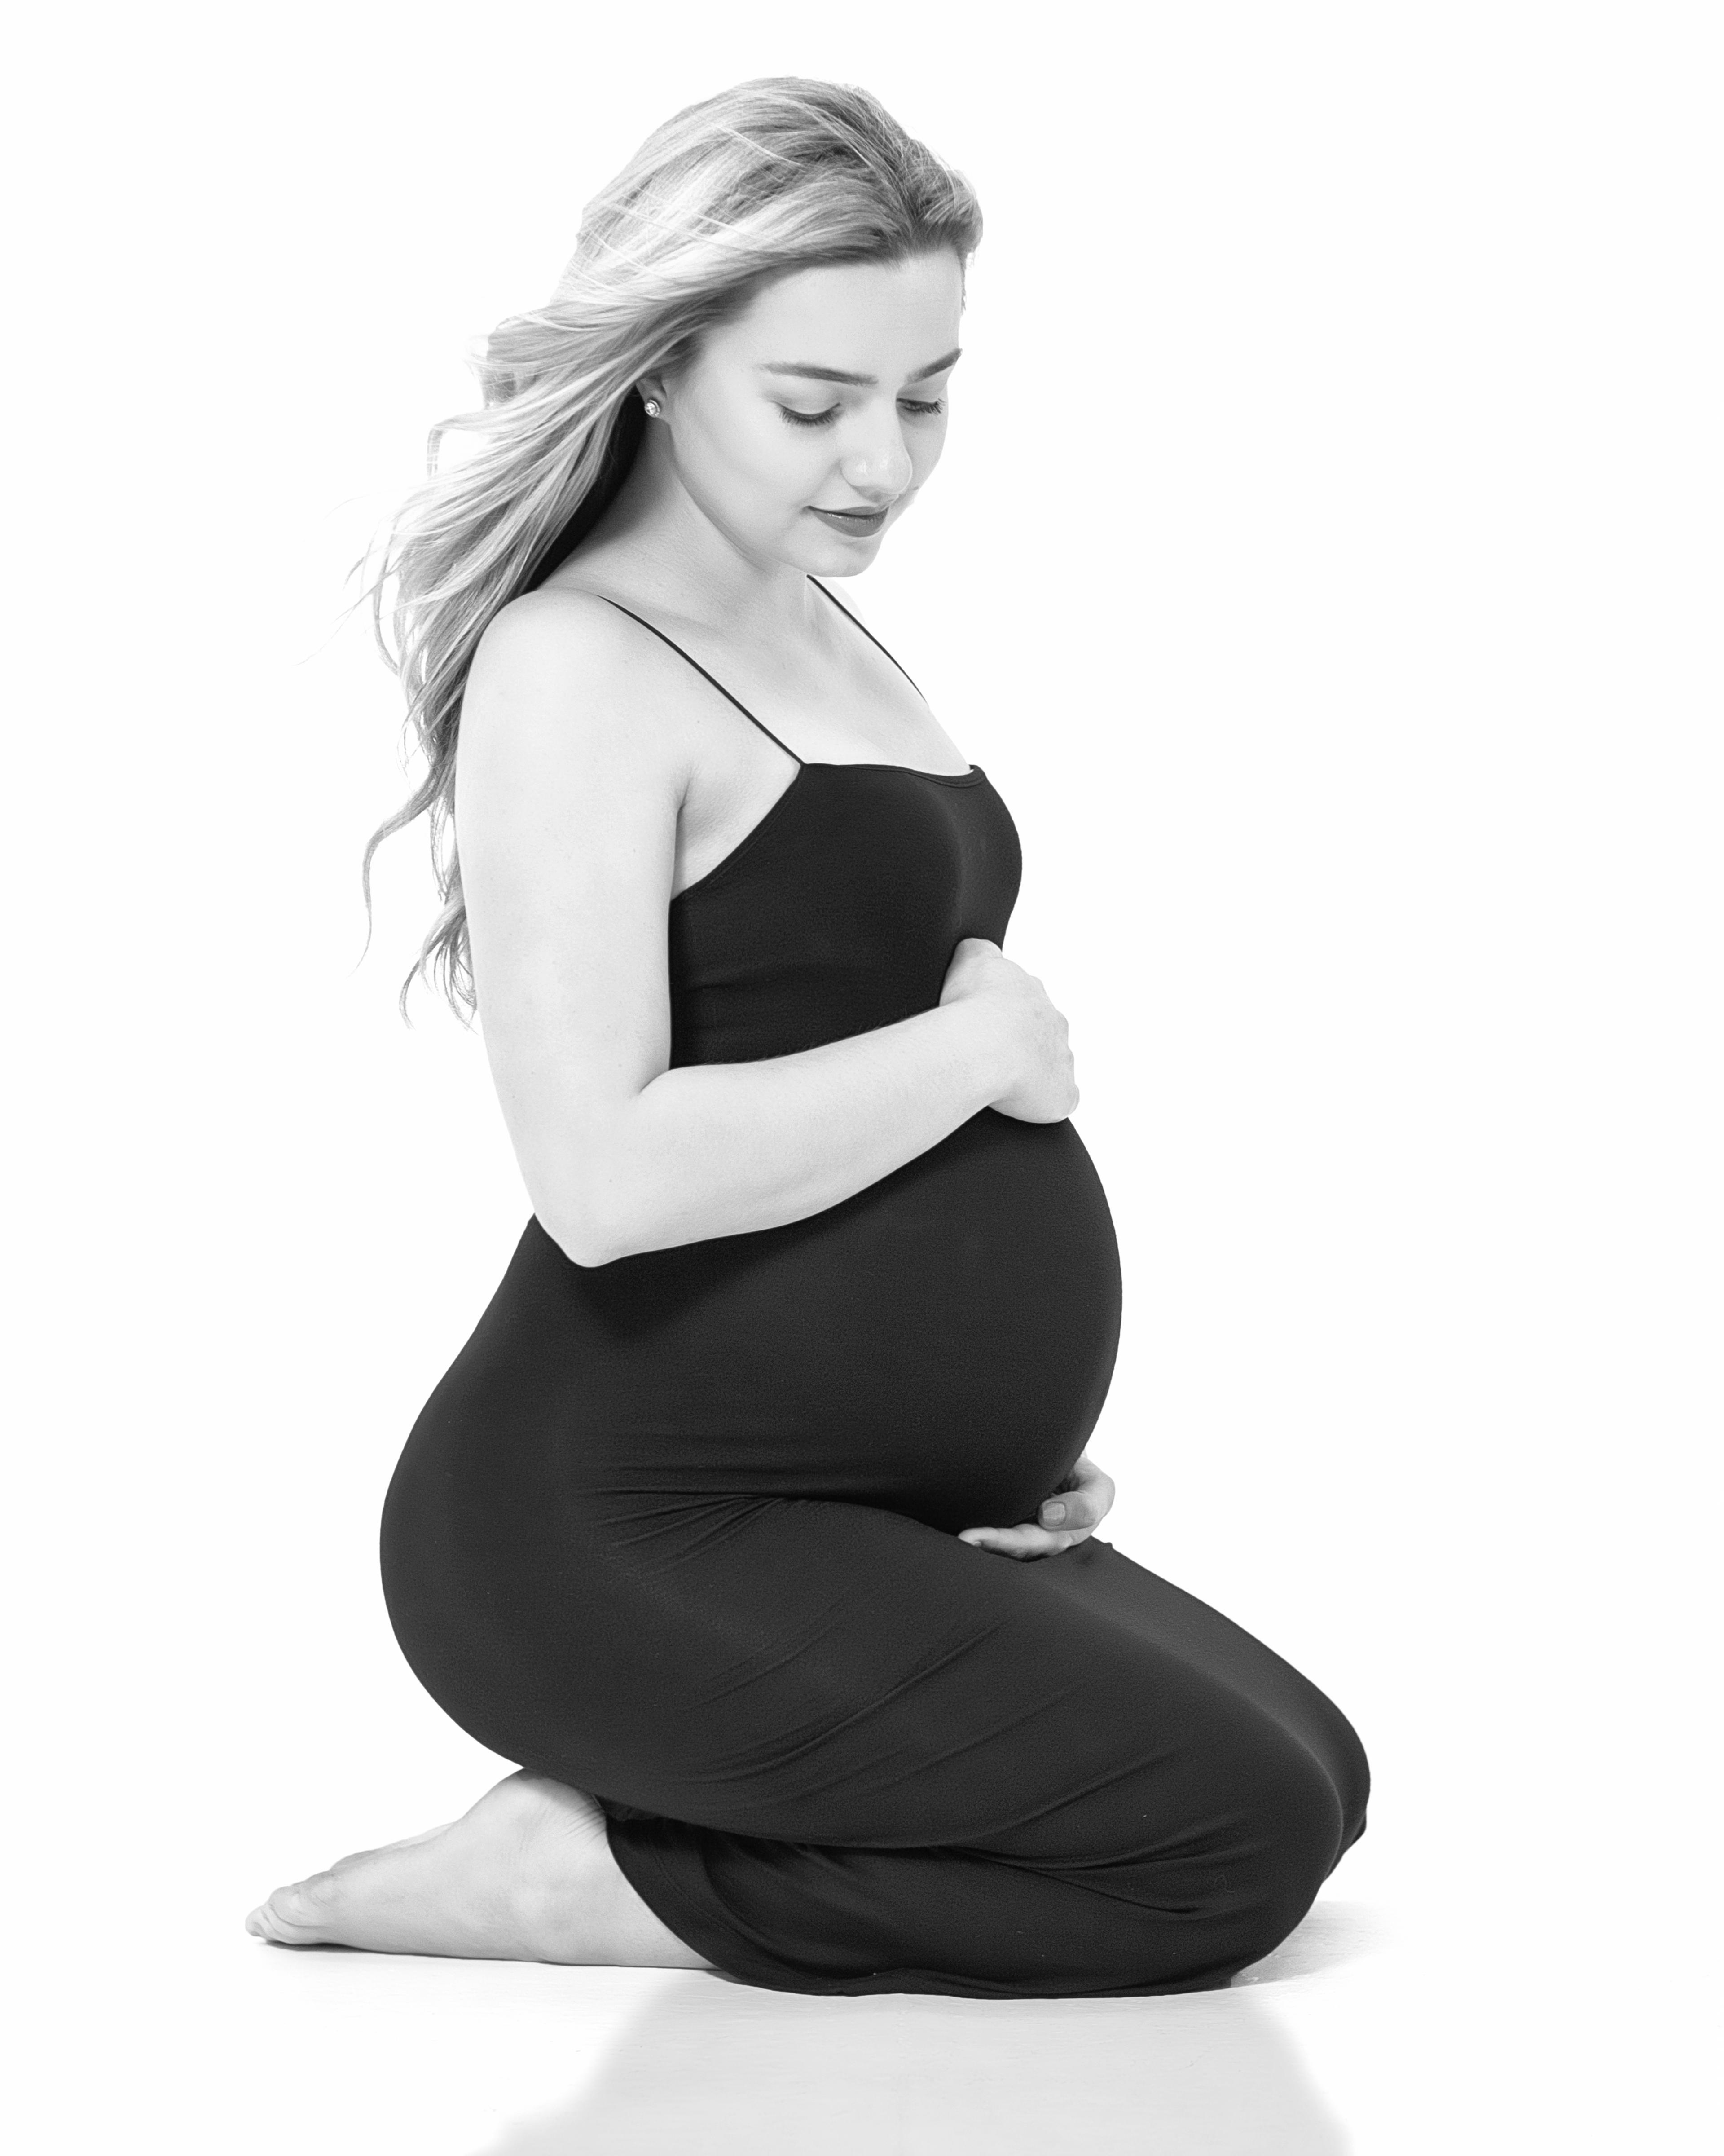 A minimalist black dress maternity photoshoot.